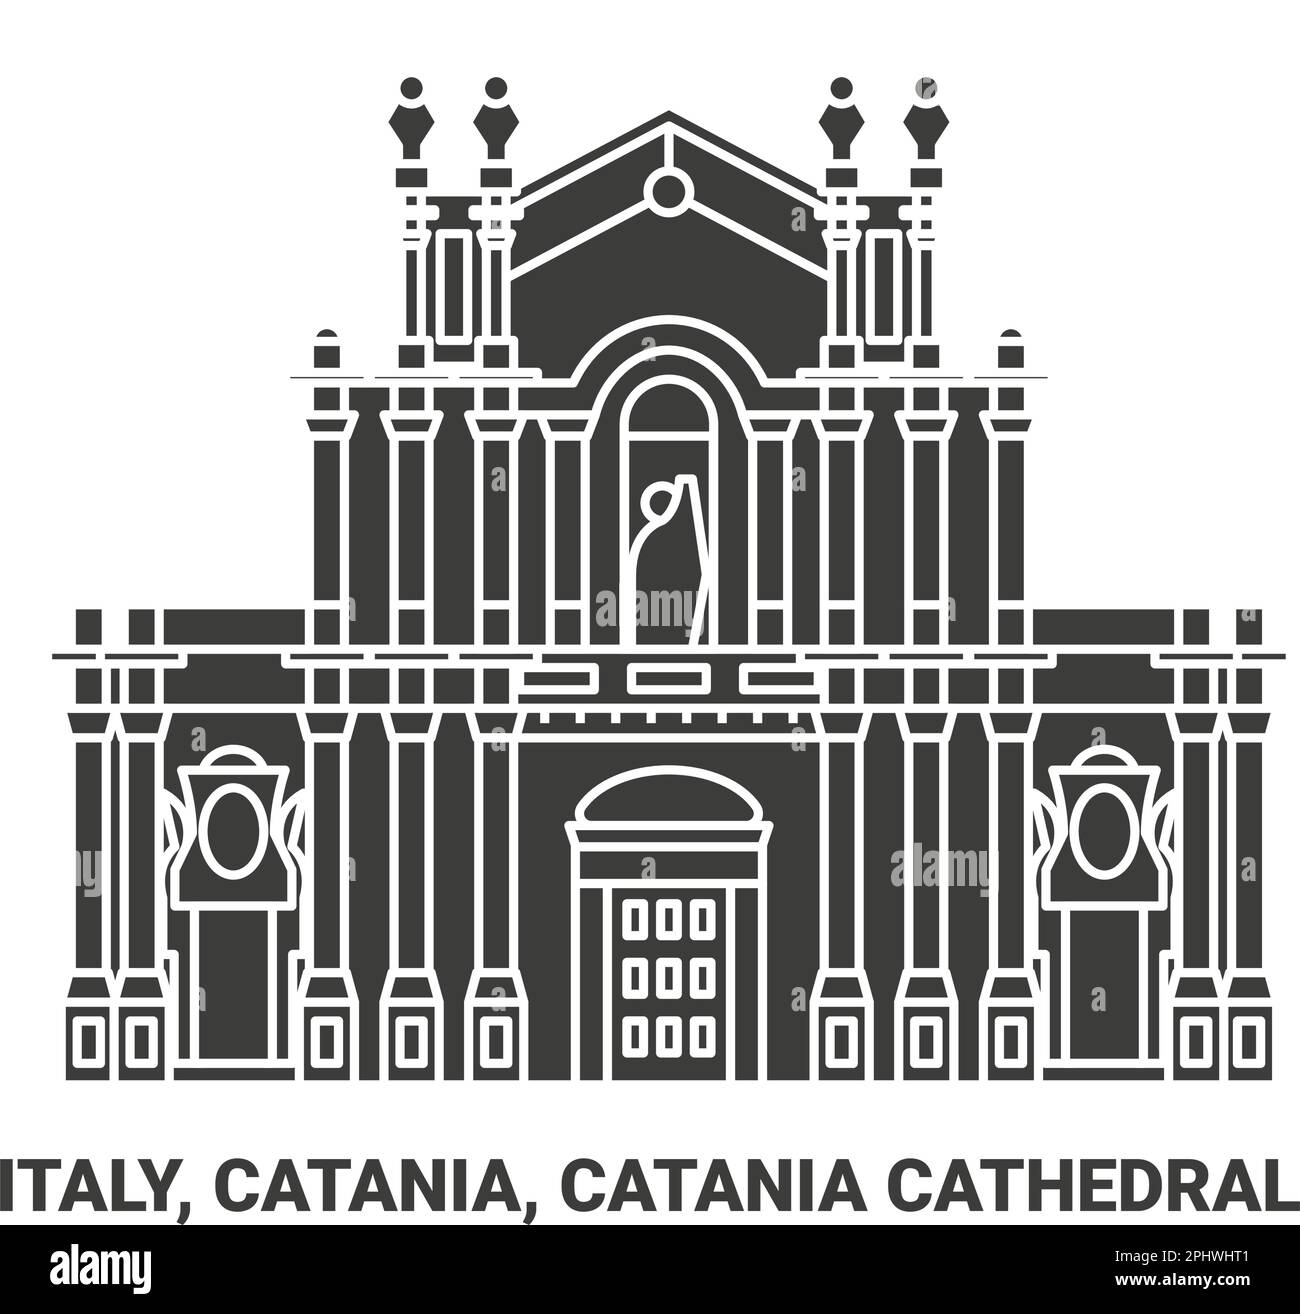 Italy, Catania, Catania Cathedral travel landmark vector illustration Stock Vector